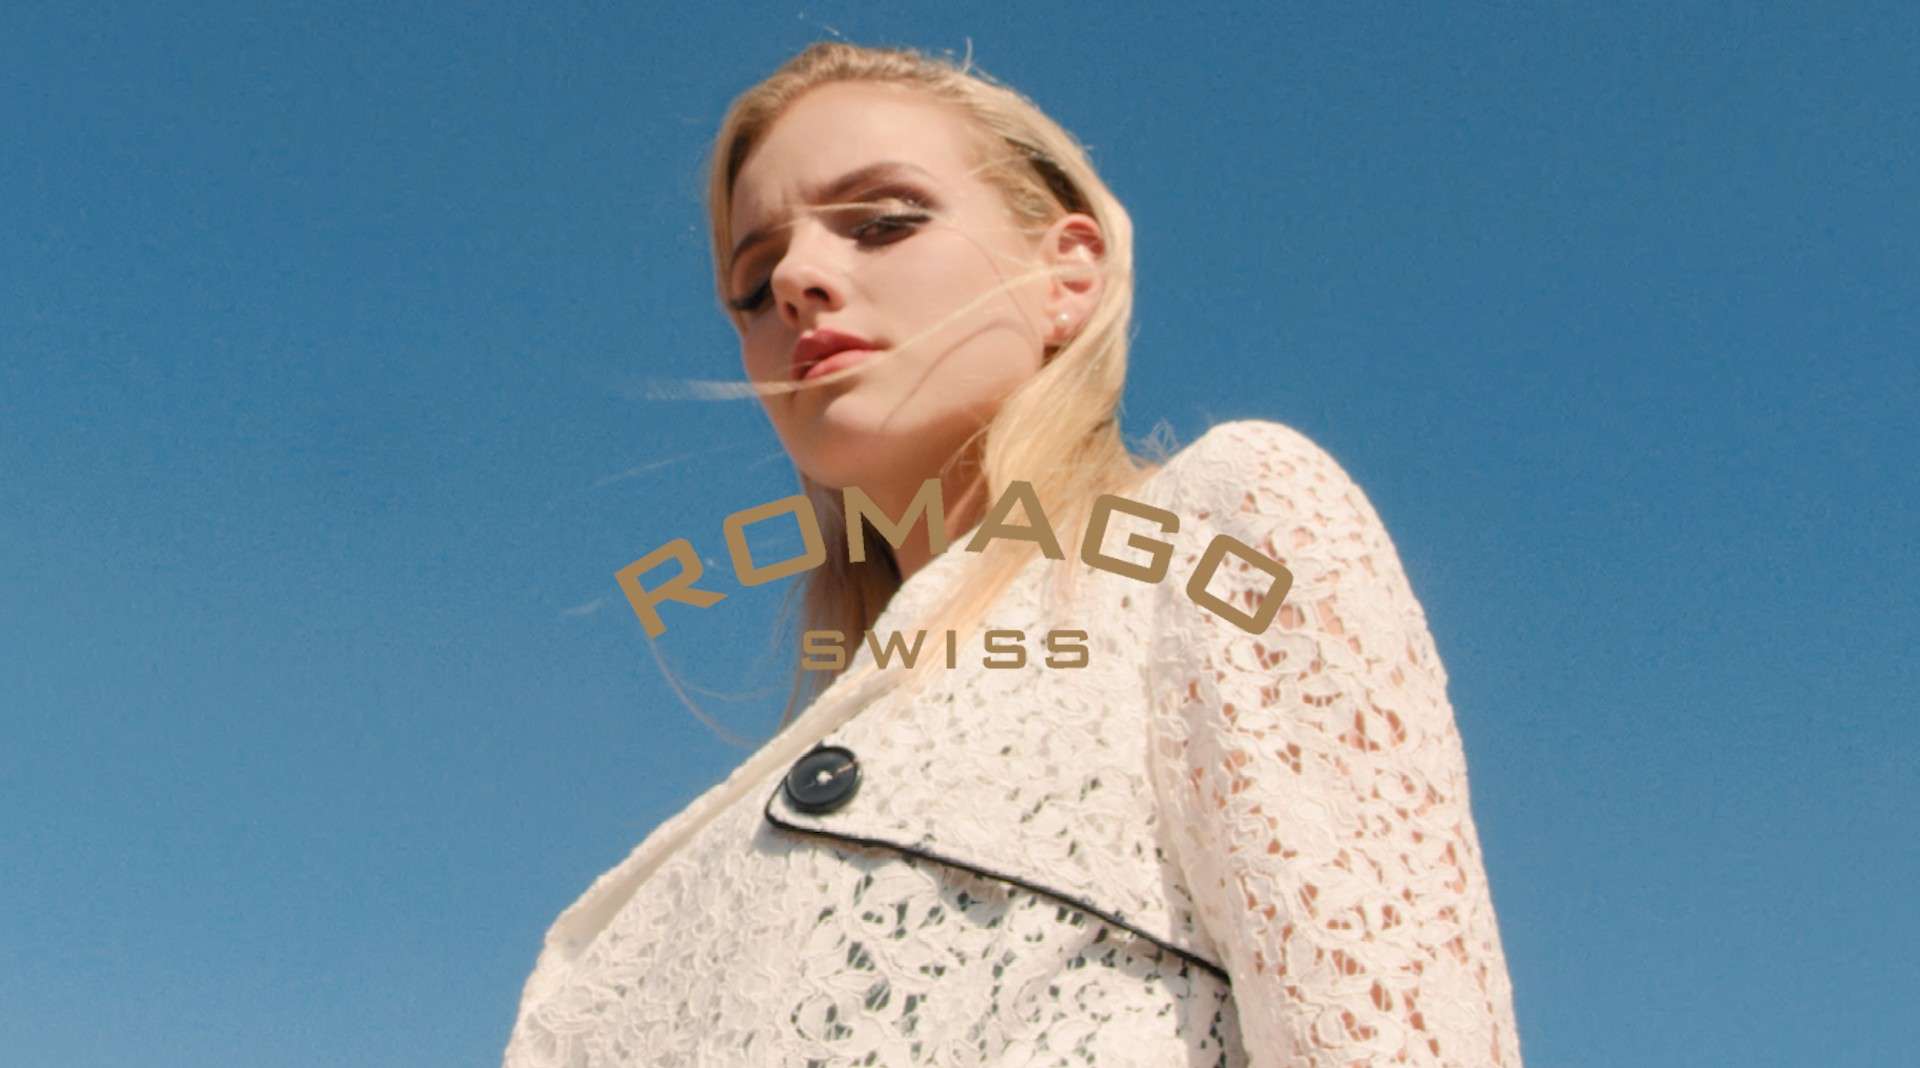 ROMAGO SWISS 2019 sapphire 宝石系列